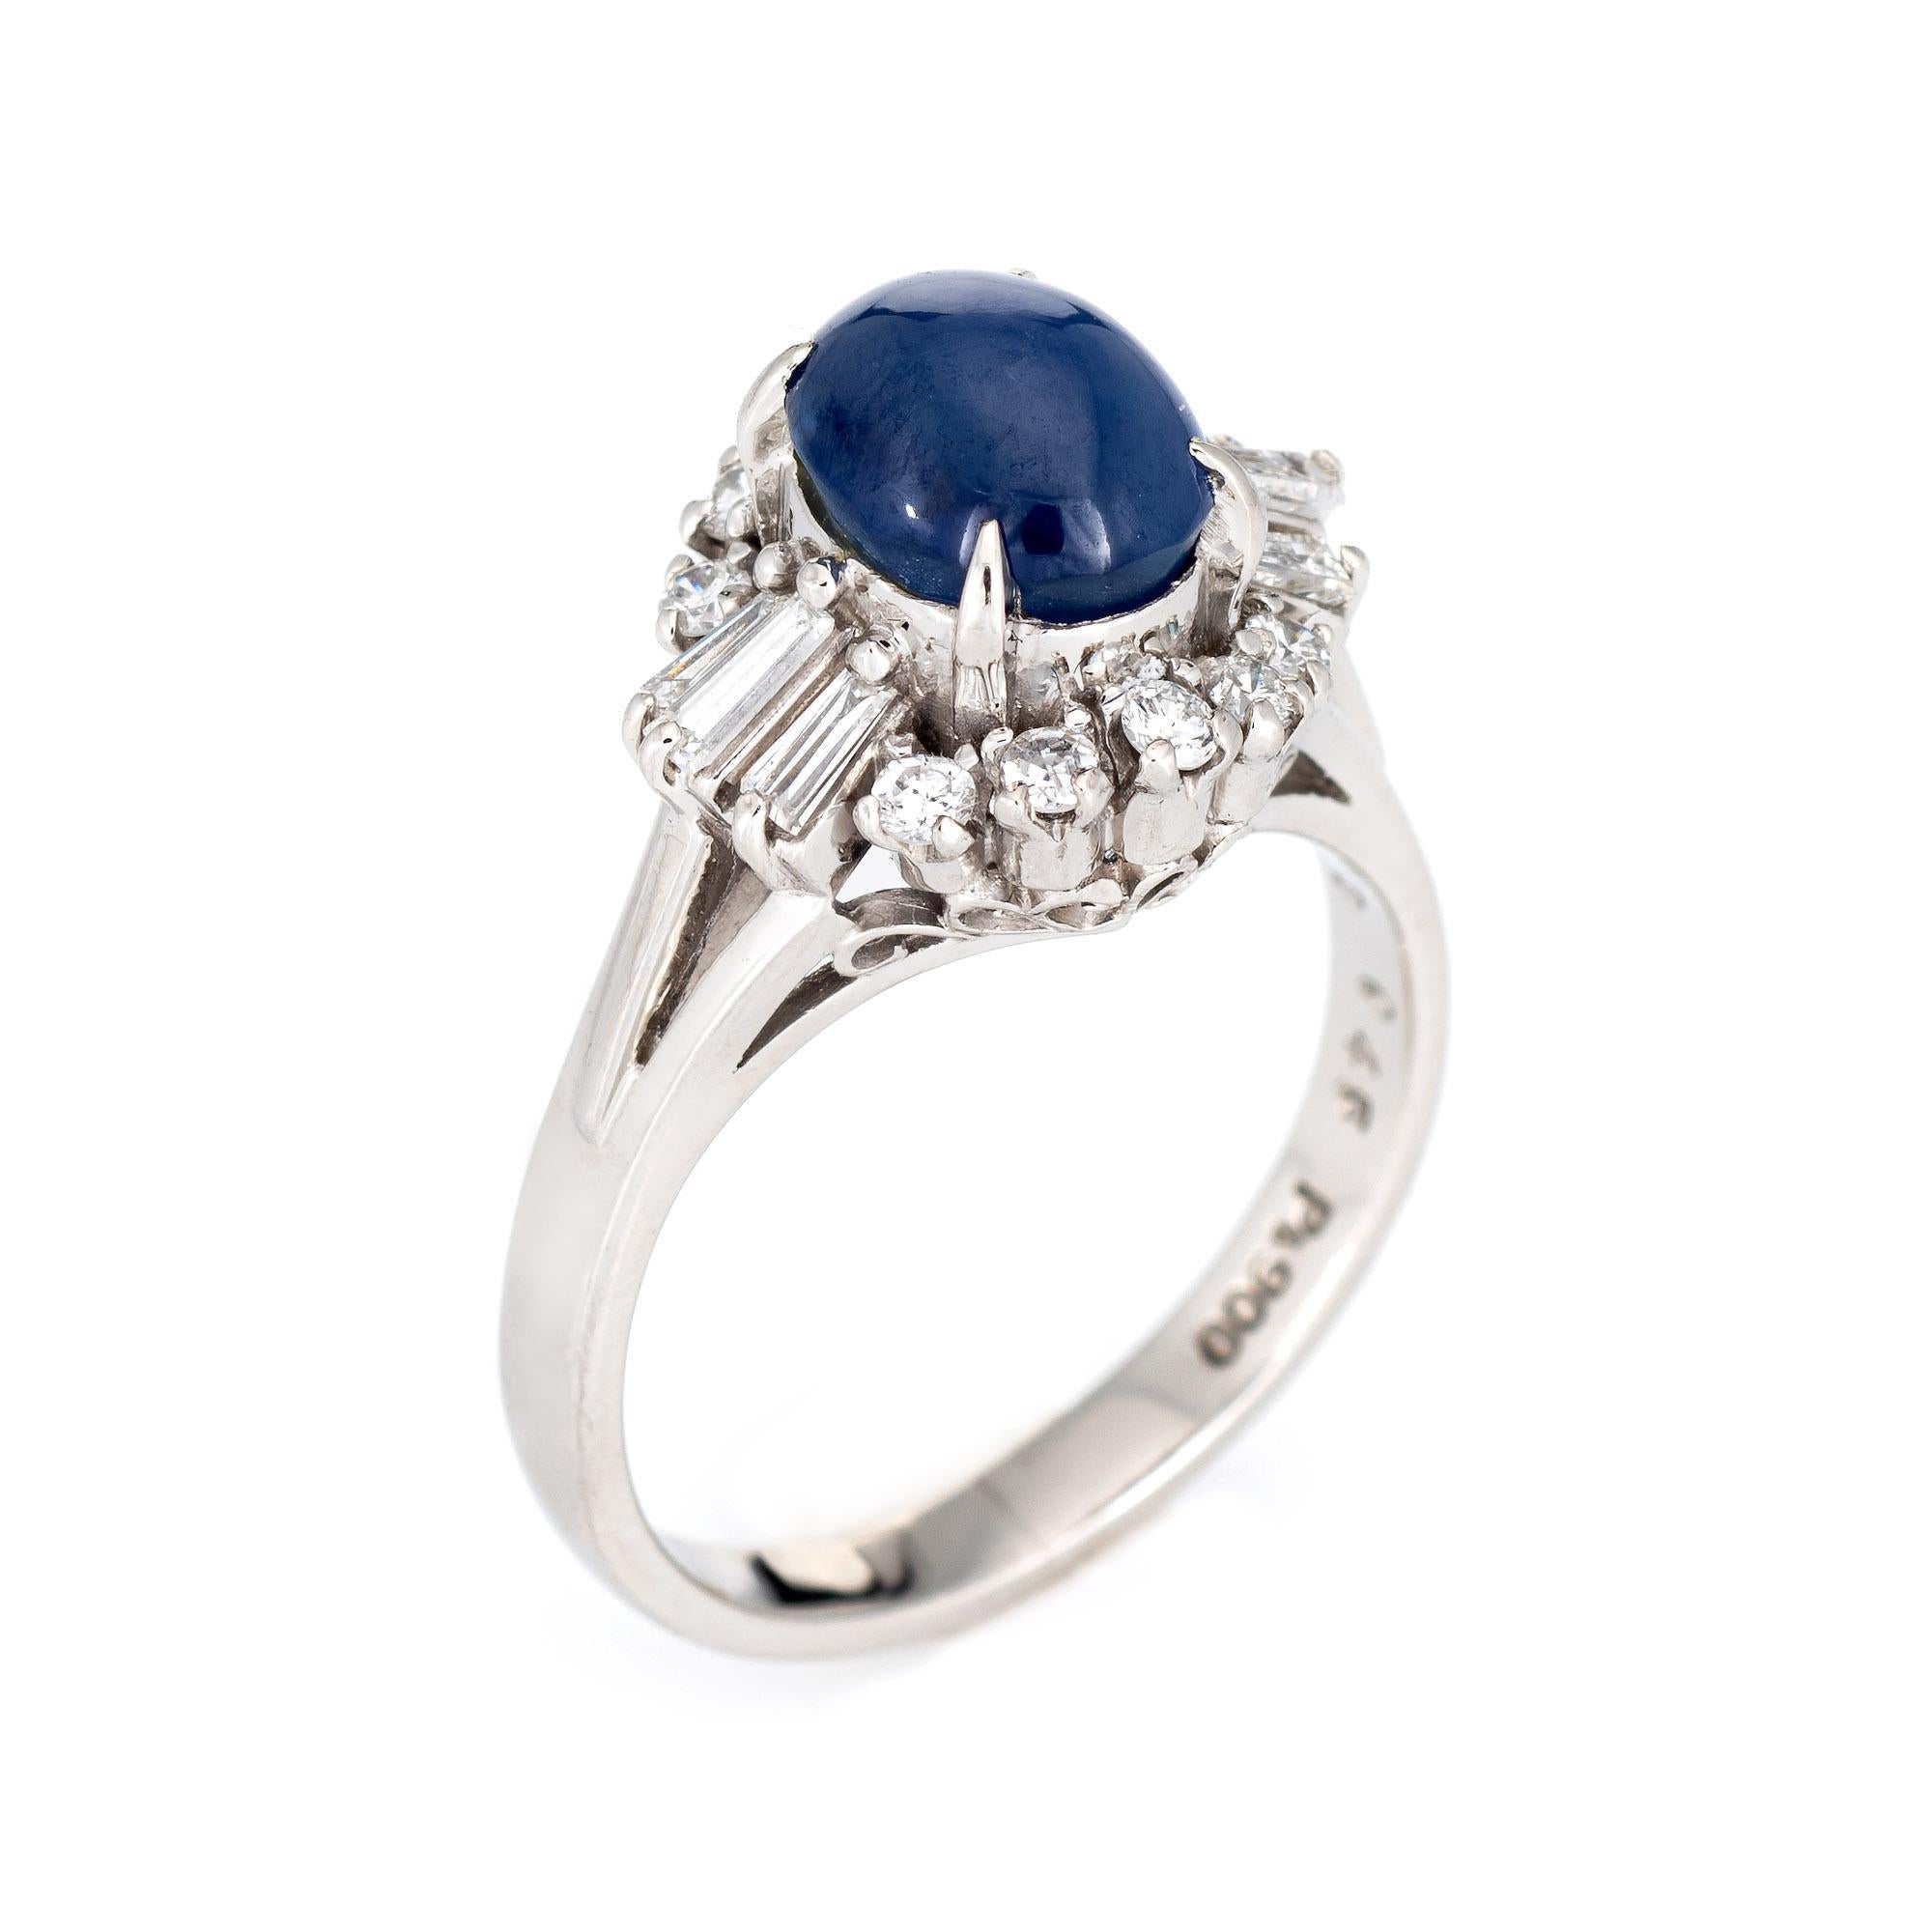 Stylish 3.40ct natural Ceylon blue star sapphire & diamond gemstone ring crafted in platinum. 

Cabochon cut natural star sapphire, 3.40ct (7.96 x 6.35 x 5.25mm), dark blue color, lightly included, good cut, Ceylon (Sri Lanka) origin, no treatments,